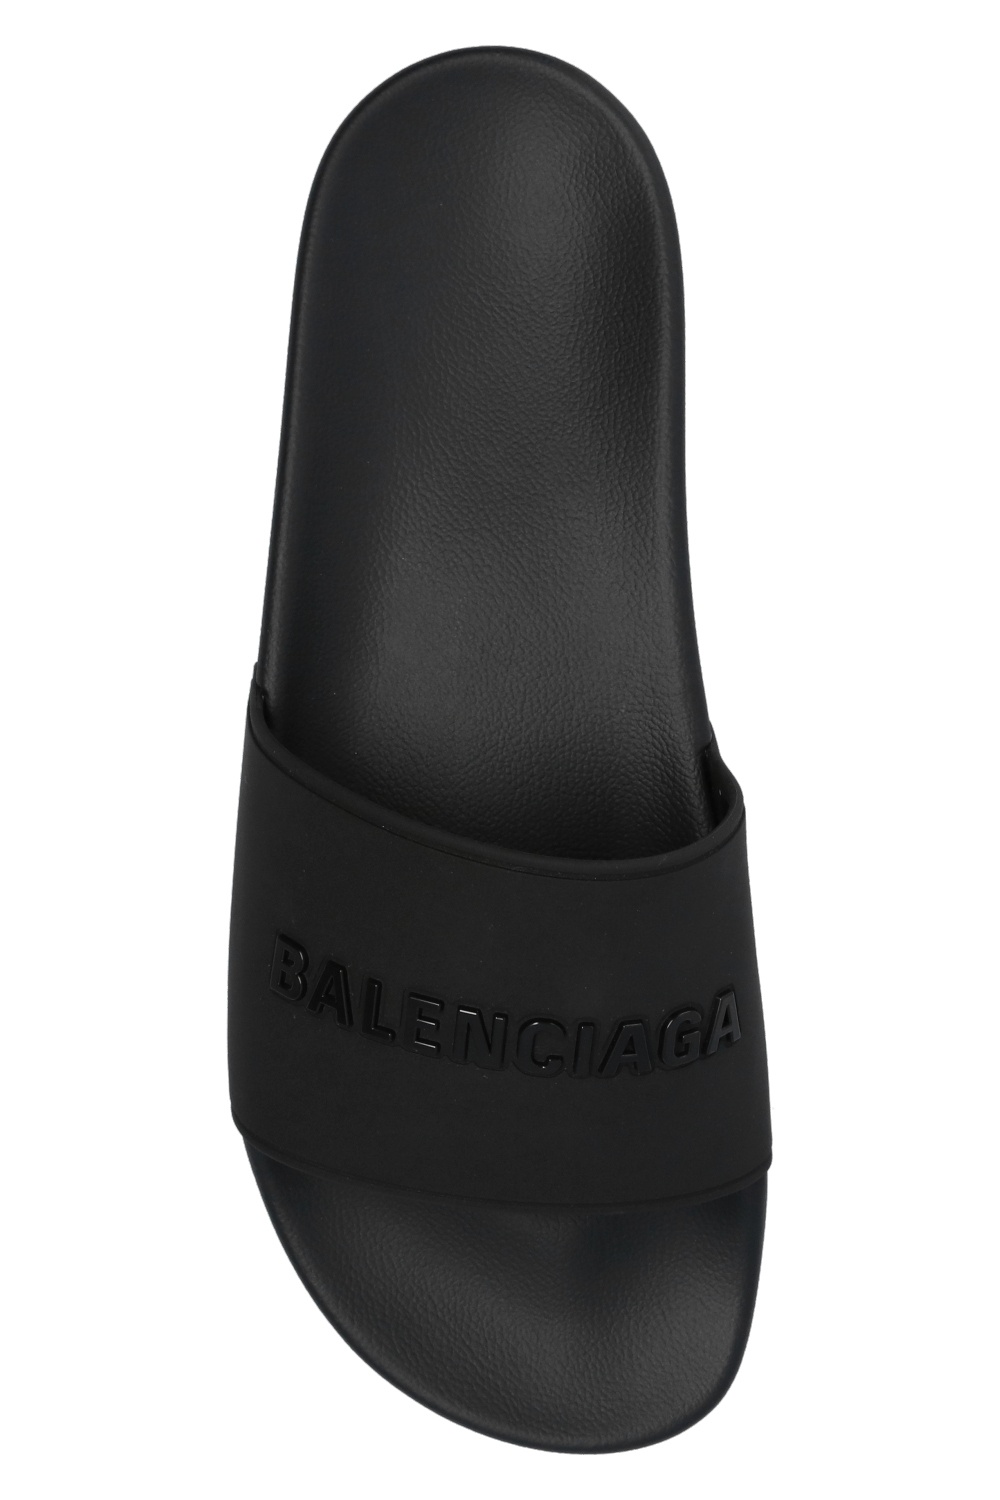 Balenciaga Pool Slide Grain Rubber Logo Ge Ometricb Grey Black  Ordixicom